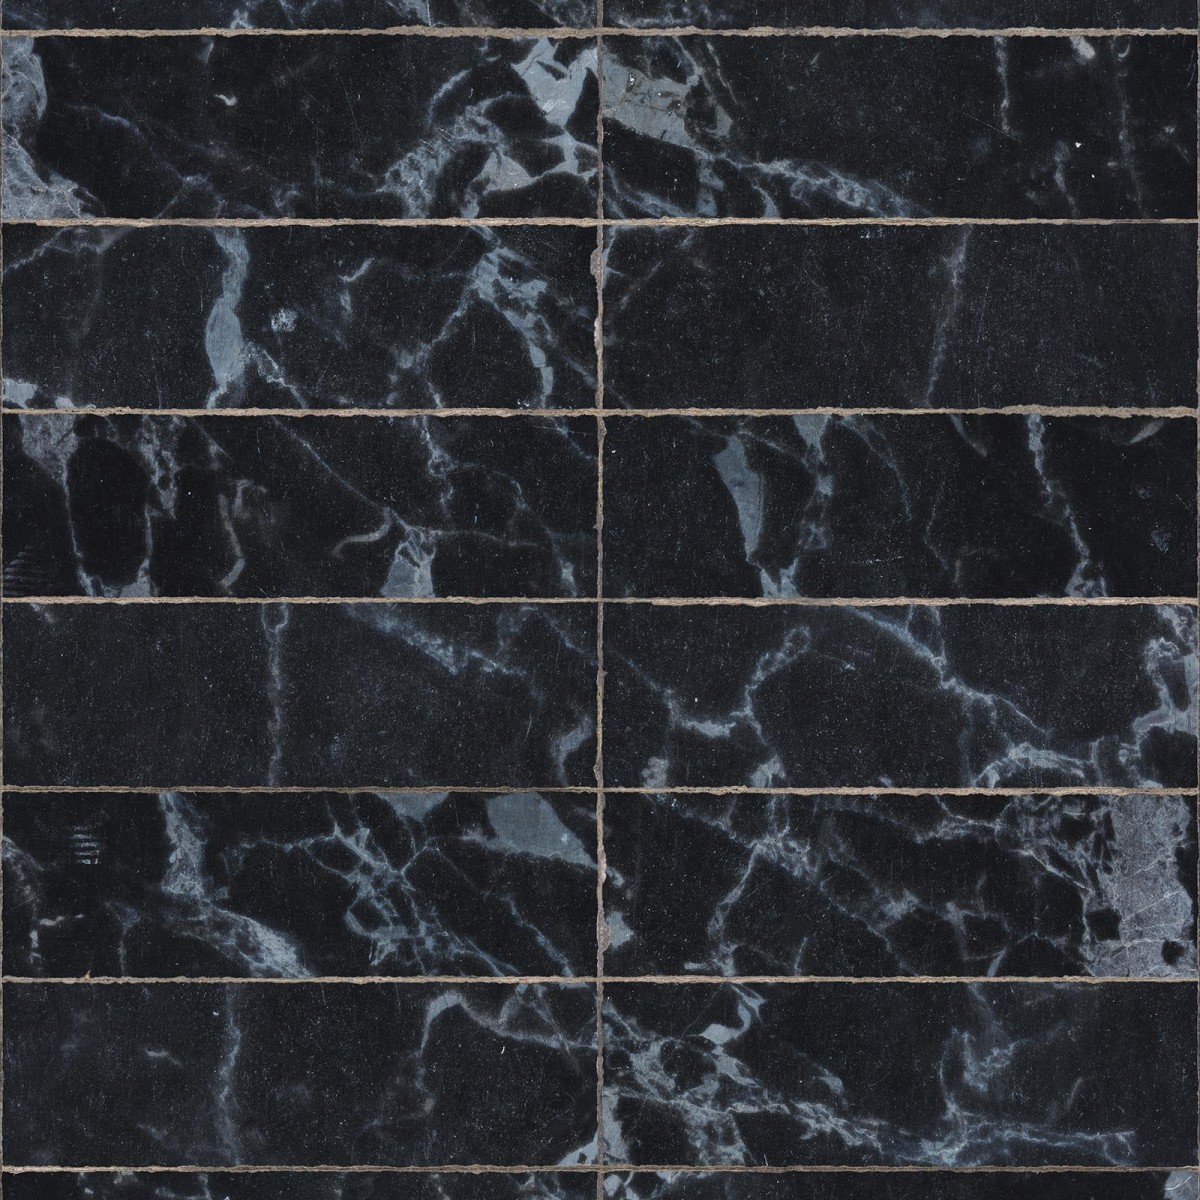 Tapet designer Materials Marble, Tiles 24.4x7.7cm, Black by Piet Hein Eek, NLXL, 4.9mp / rola, Tapet Exclusivist 